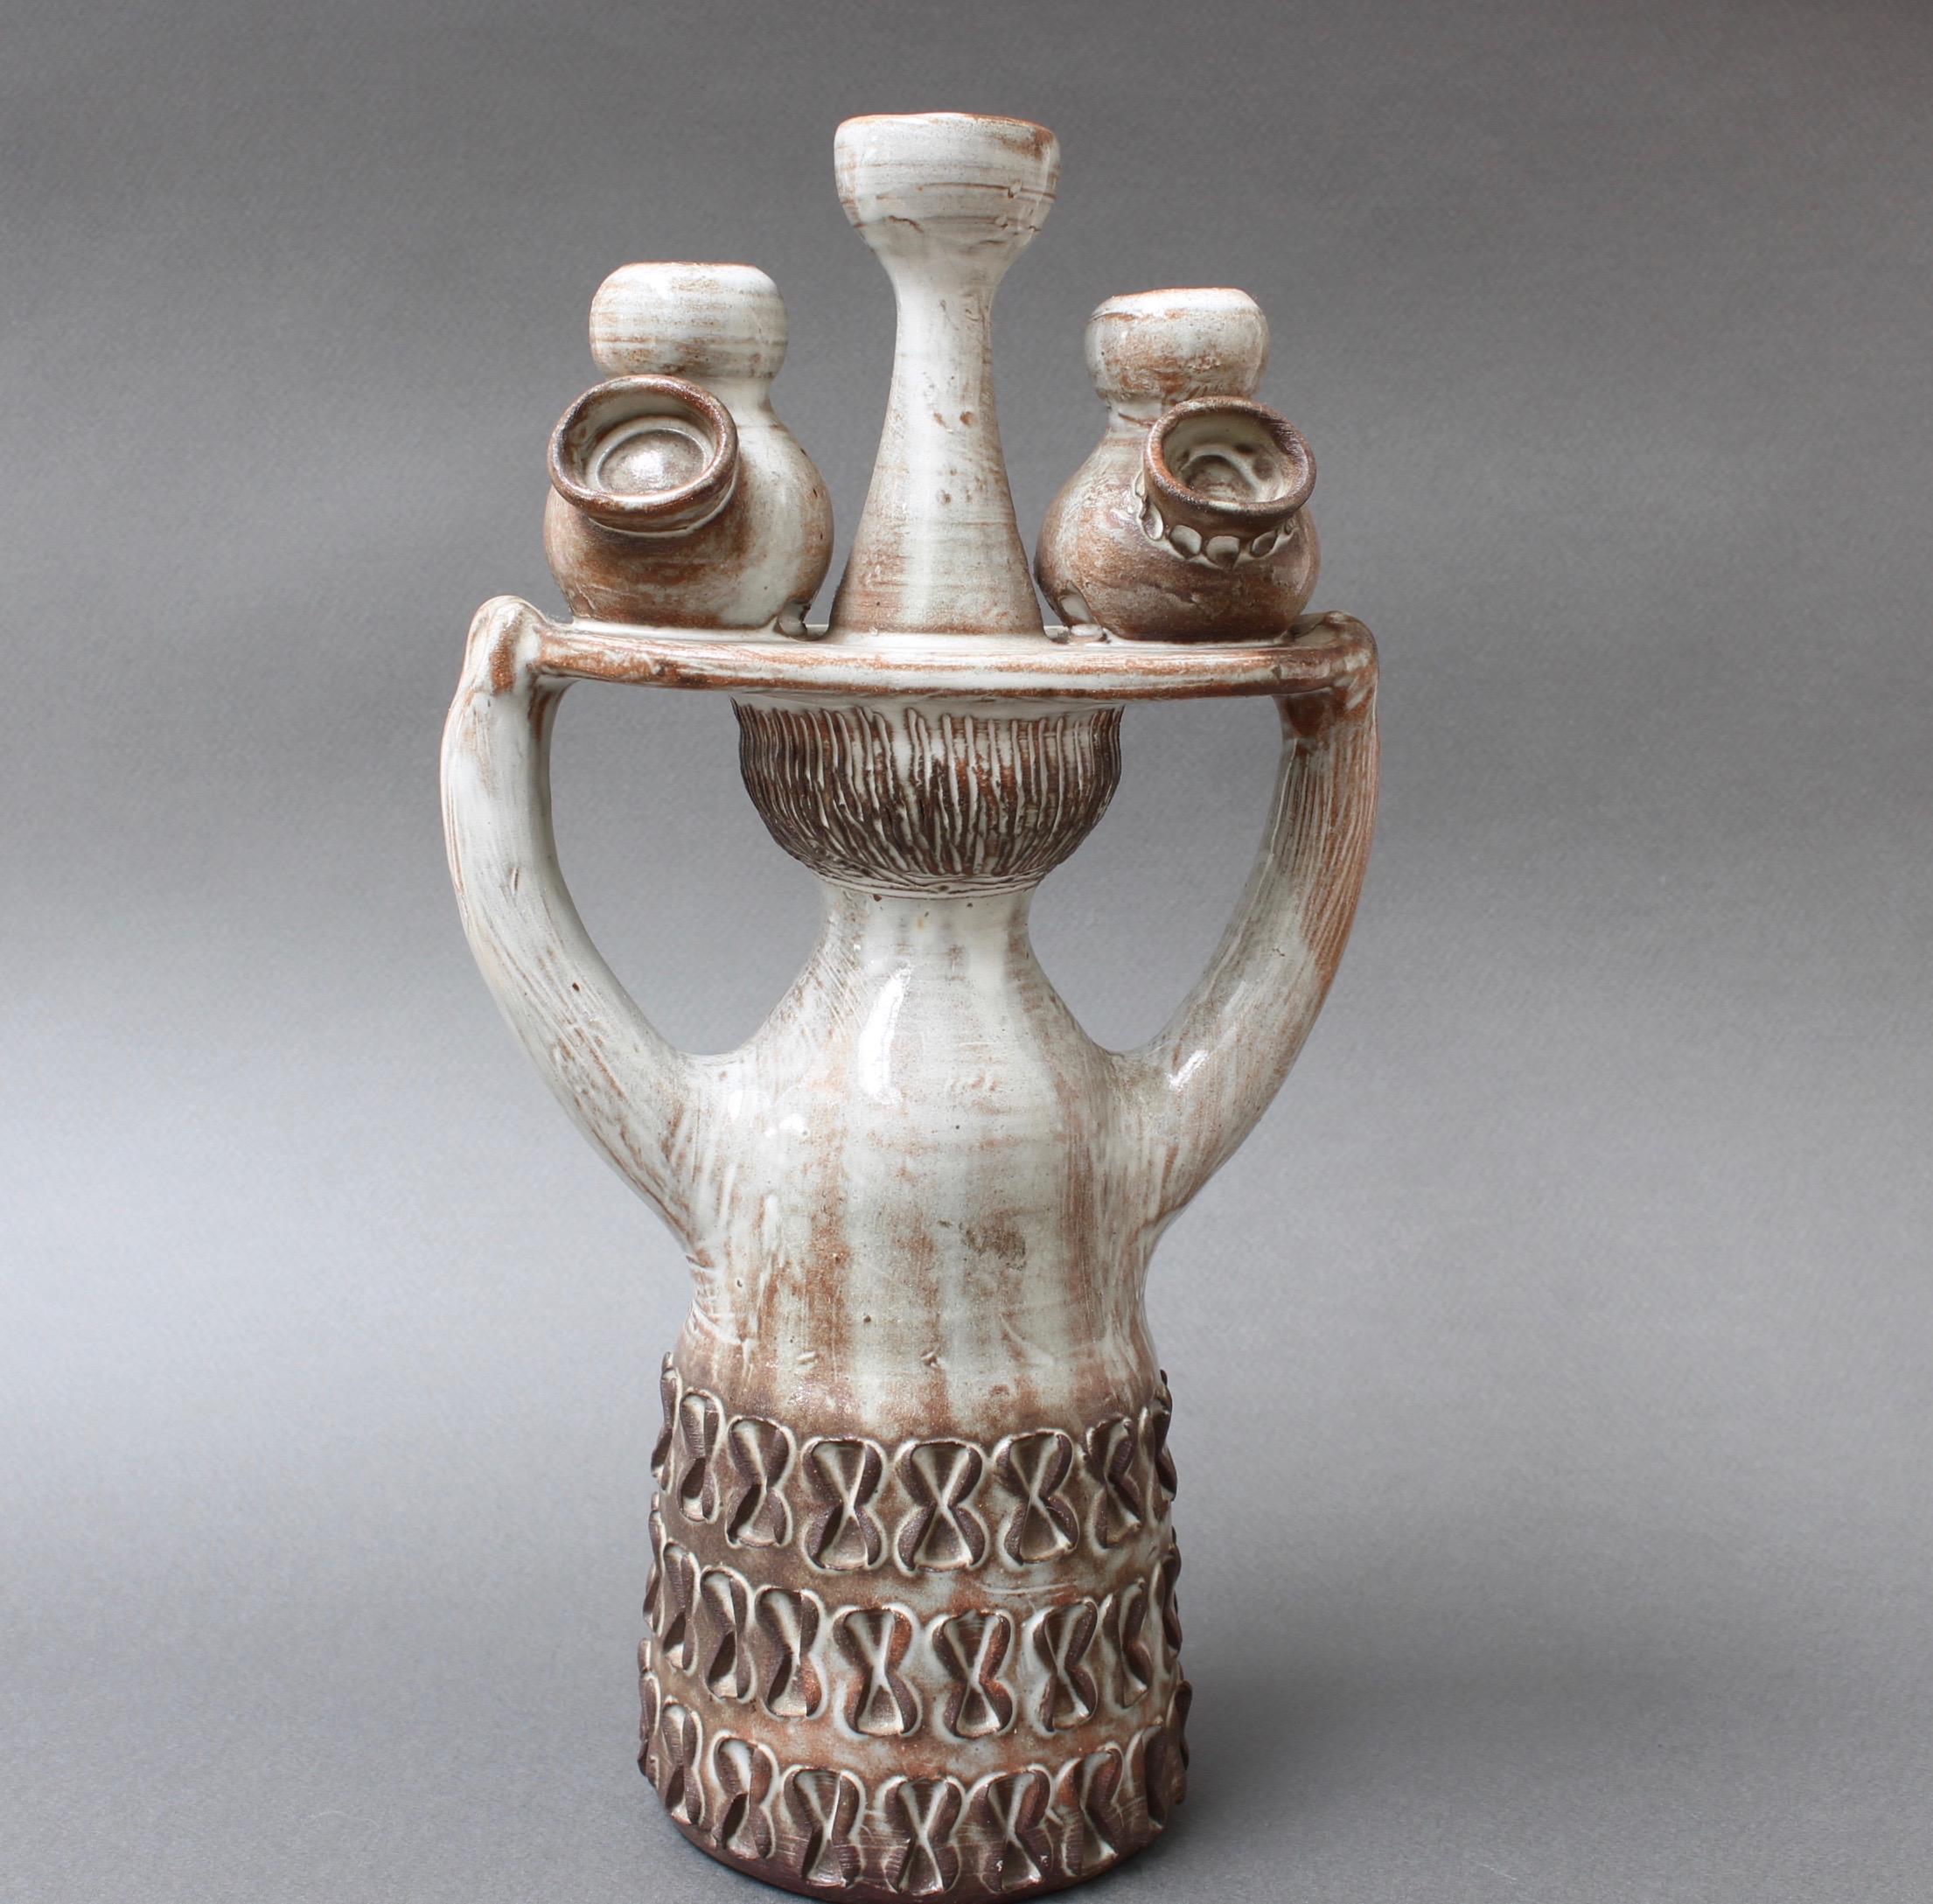 20th Century Glazed Ceramic Pottery Carrier by Jacques Pouchain / Atelier Dieulefit